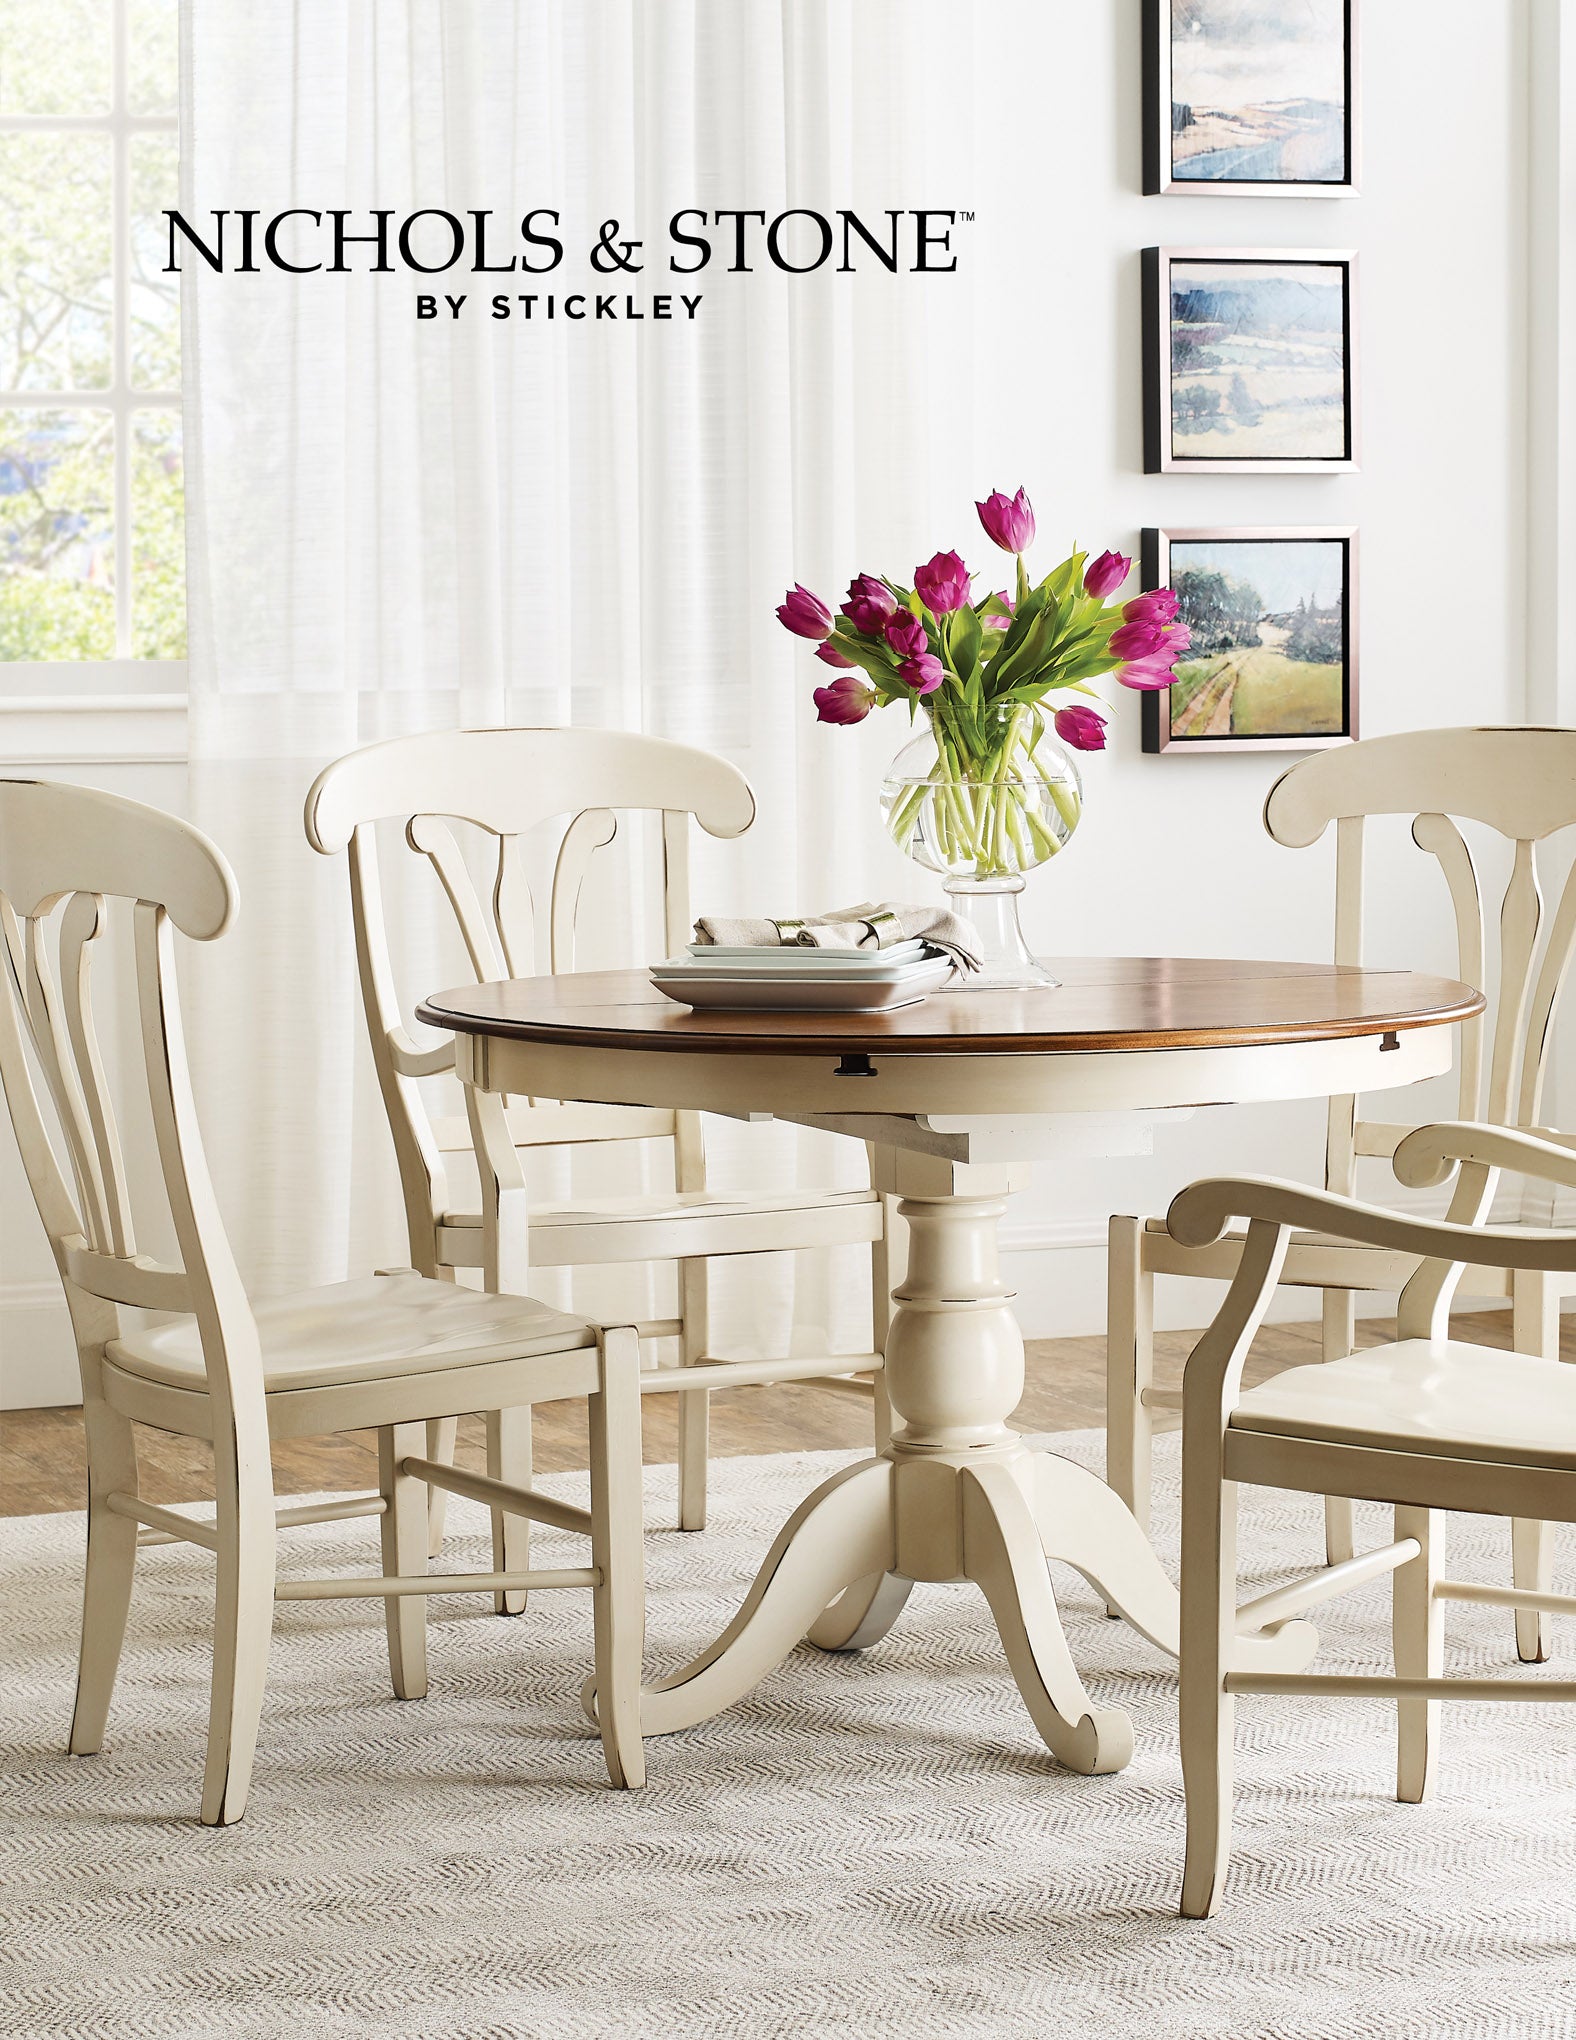 Nichols & Stone Catalog - Stickley Furniture | Mattress